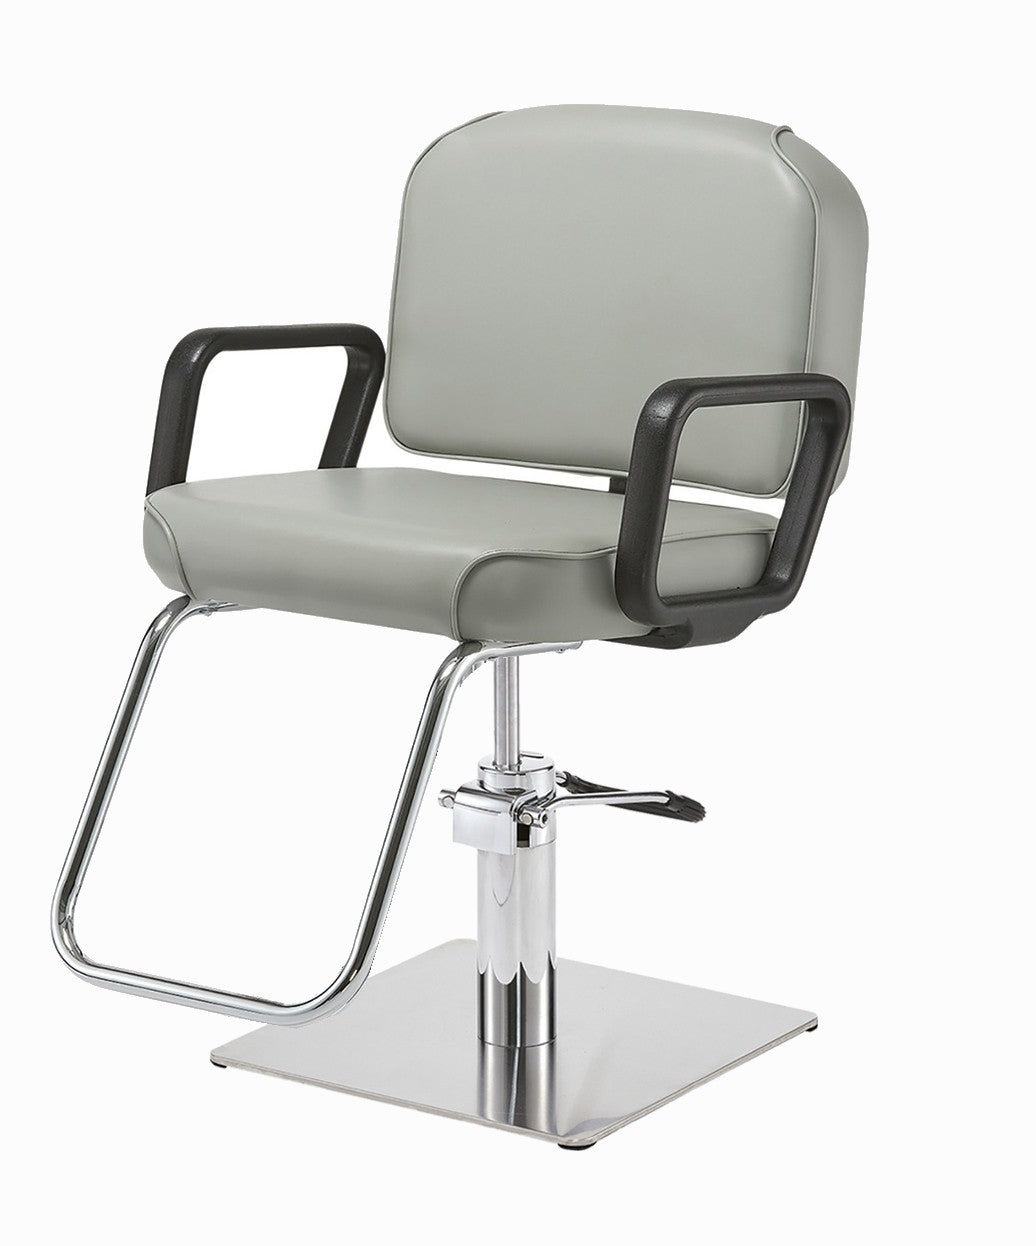 Pibbs 4306 Lambada Styling Chair